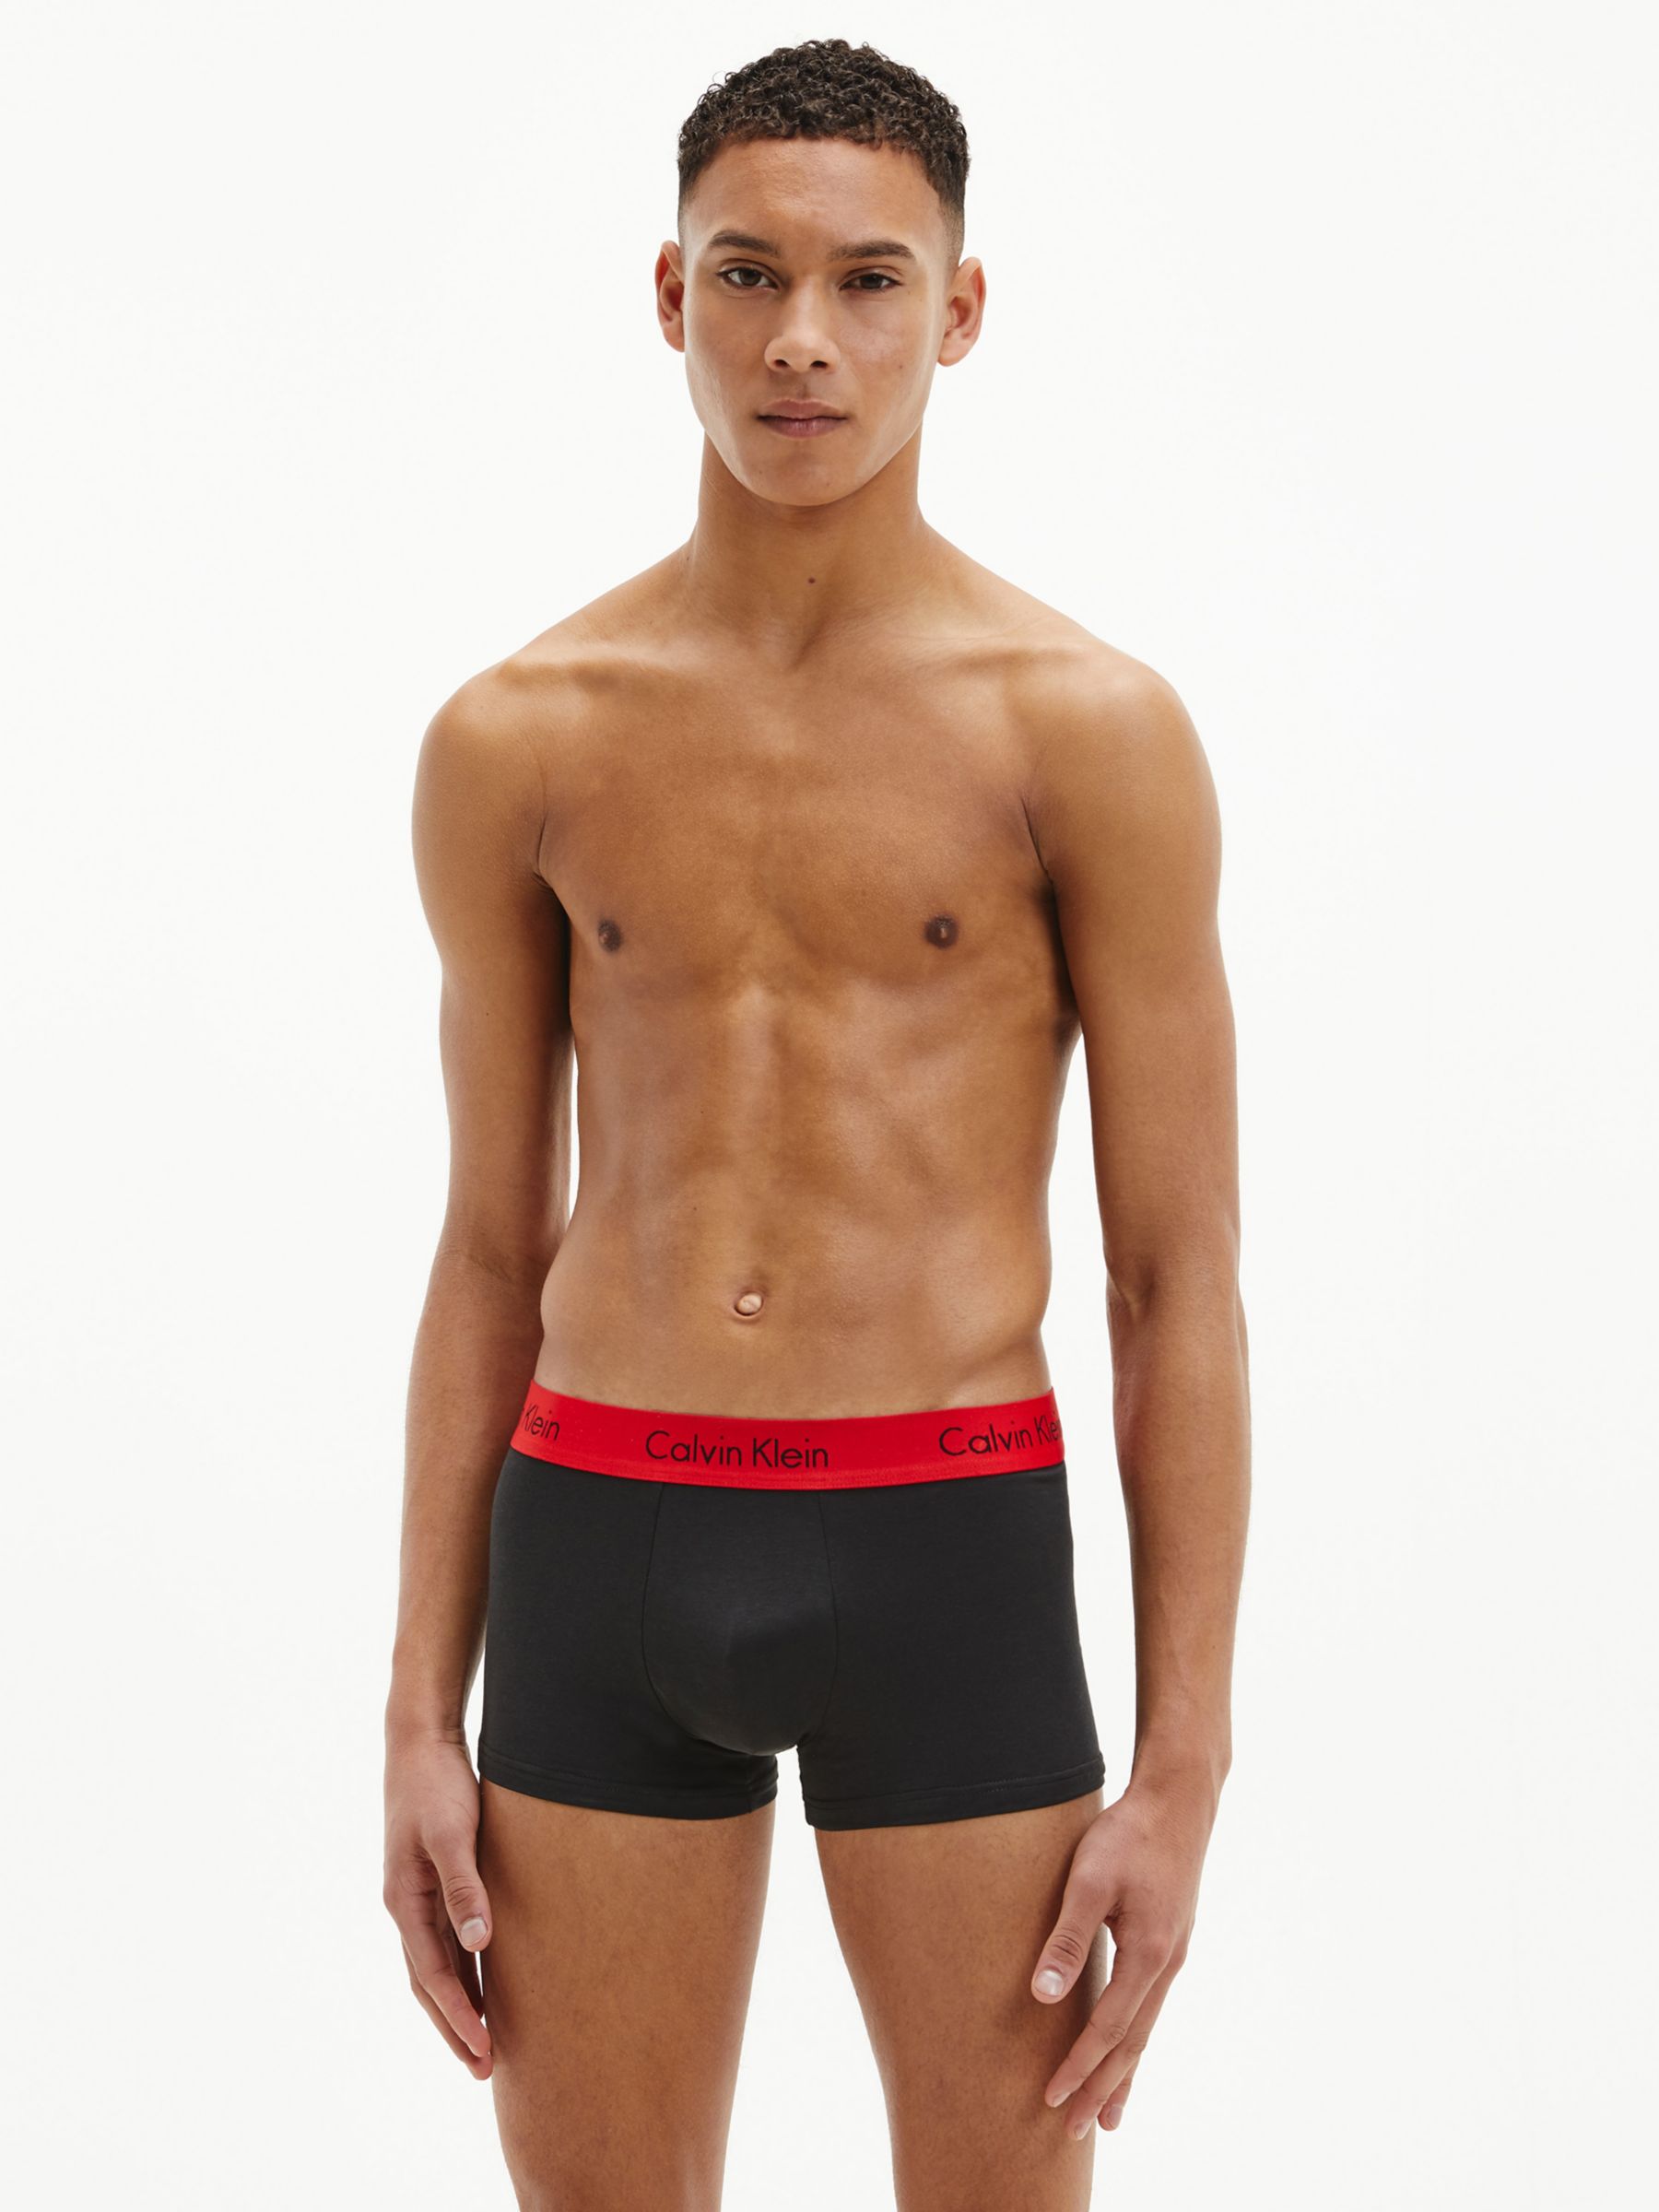 Calvin Klein Men's Underwear | John Lewis & Partners